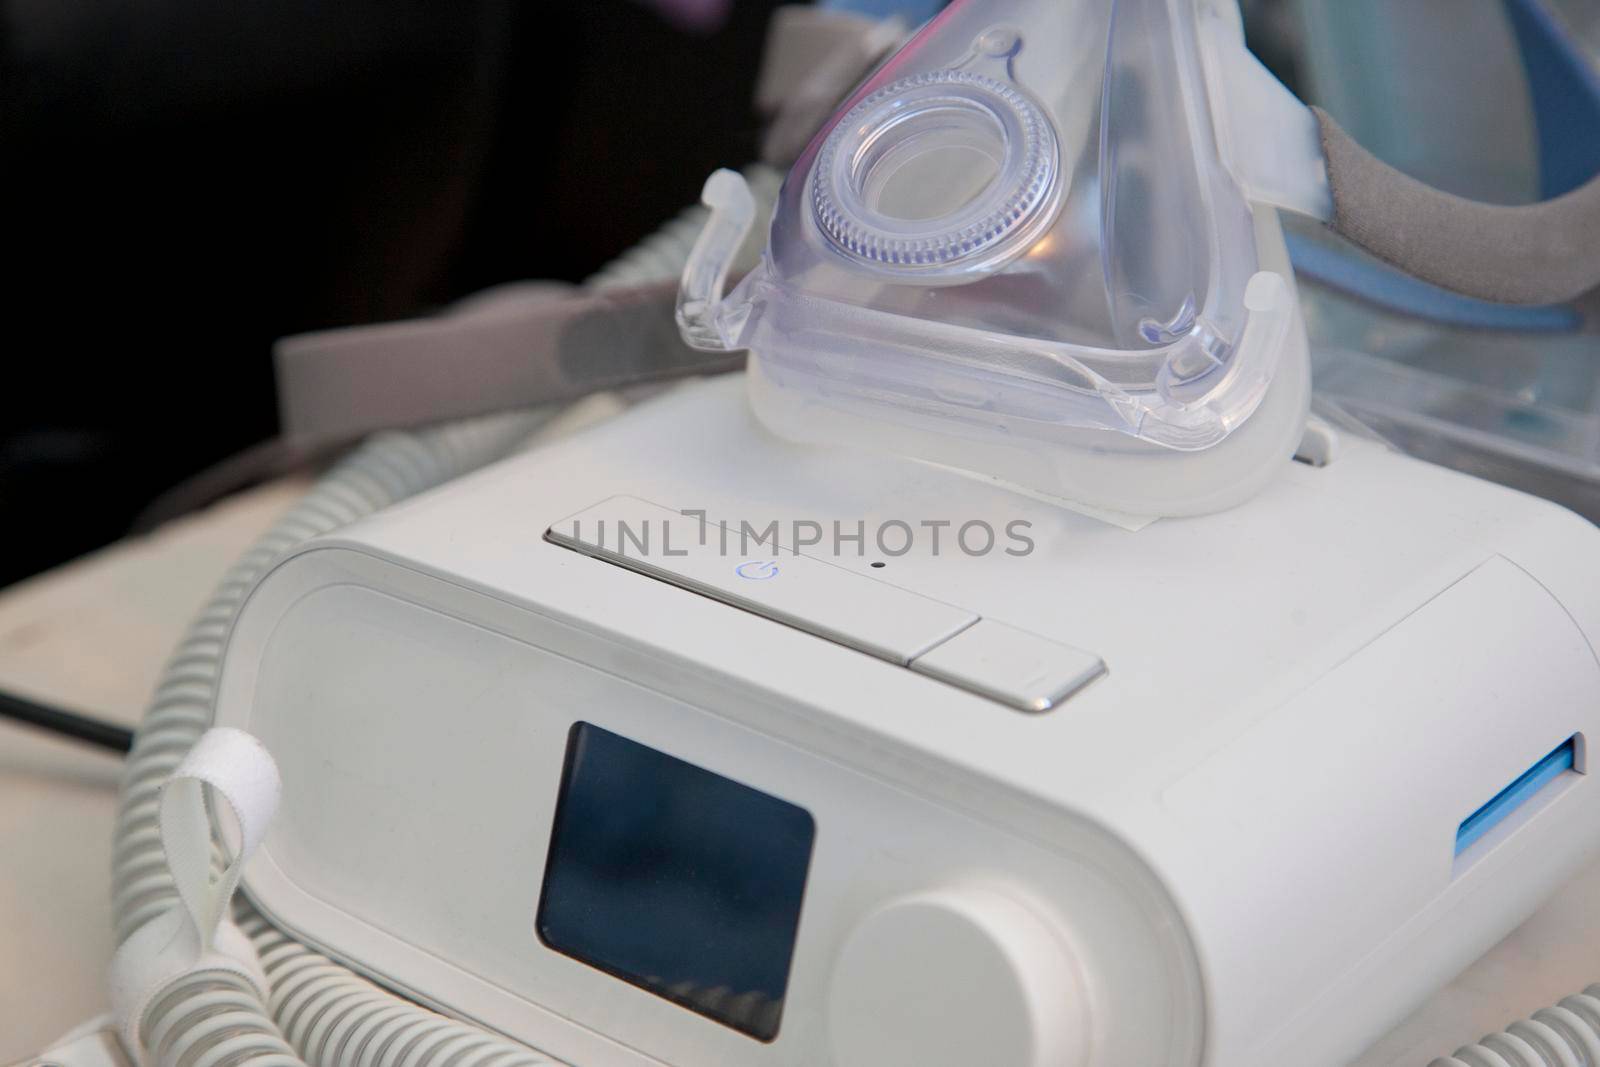 A CPAP machine by rustycanuck